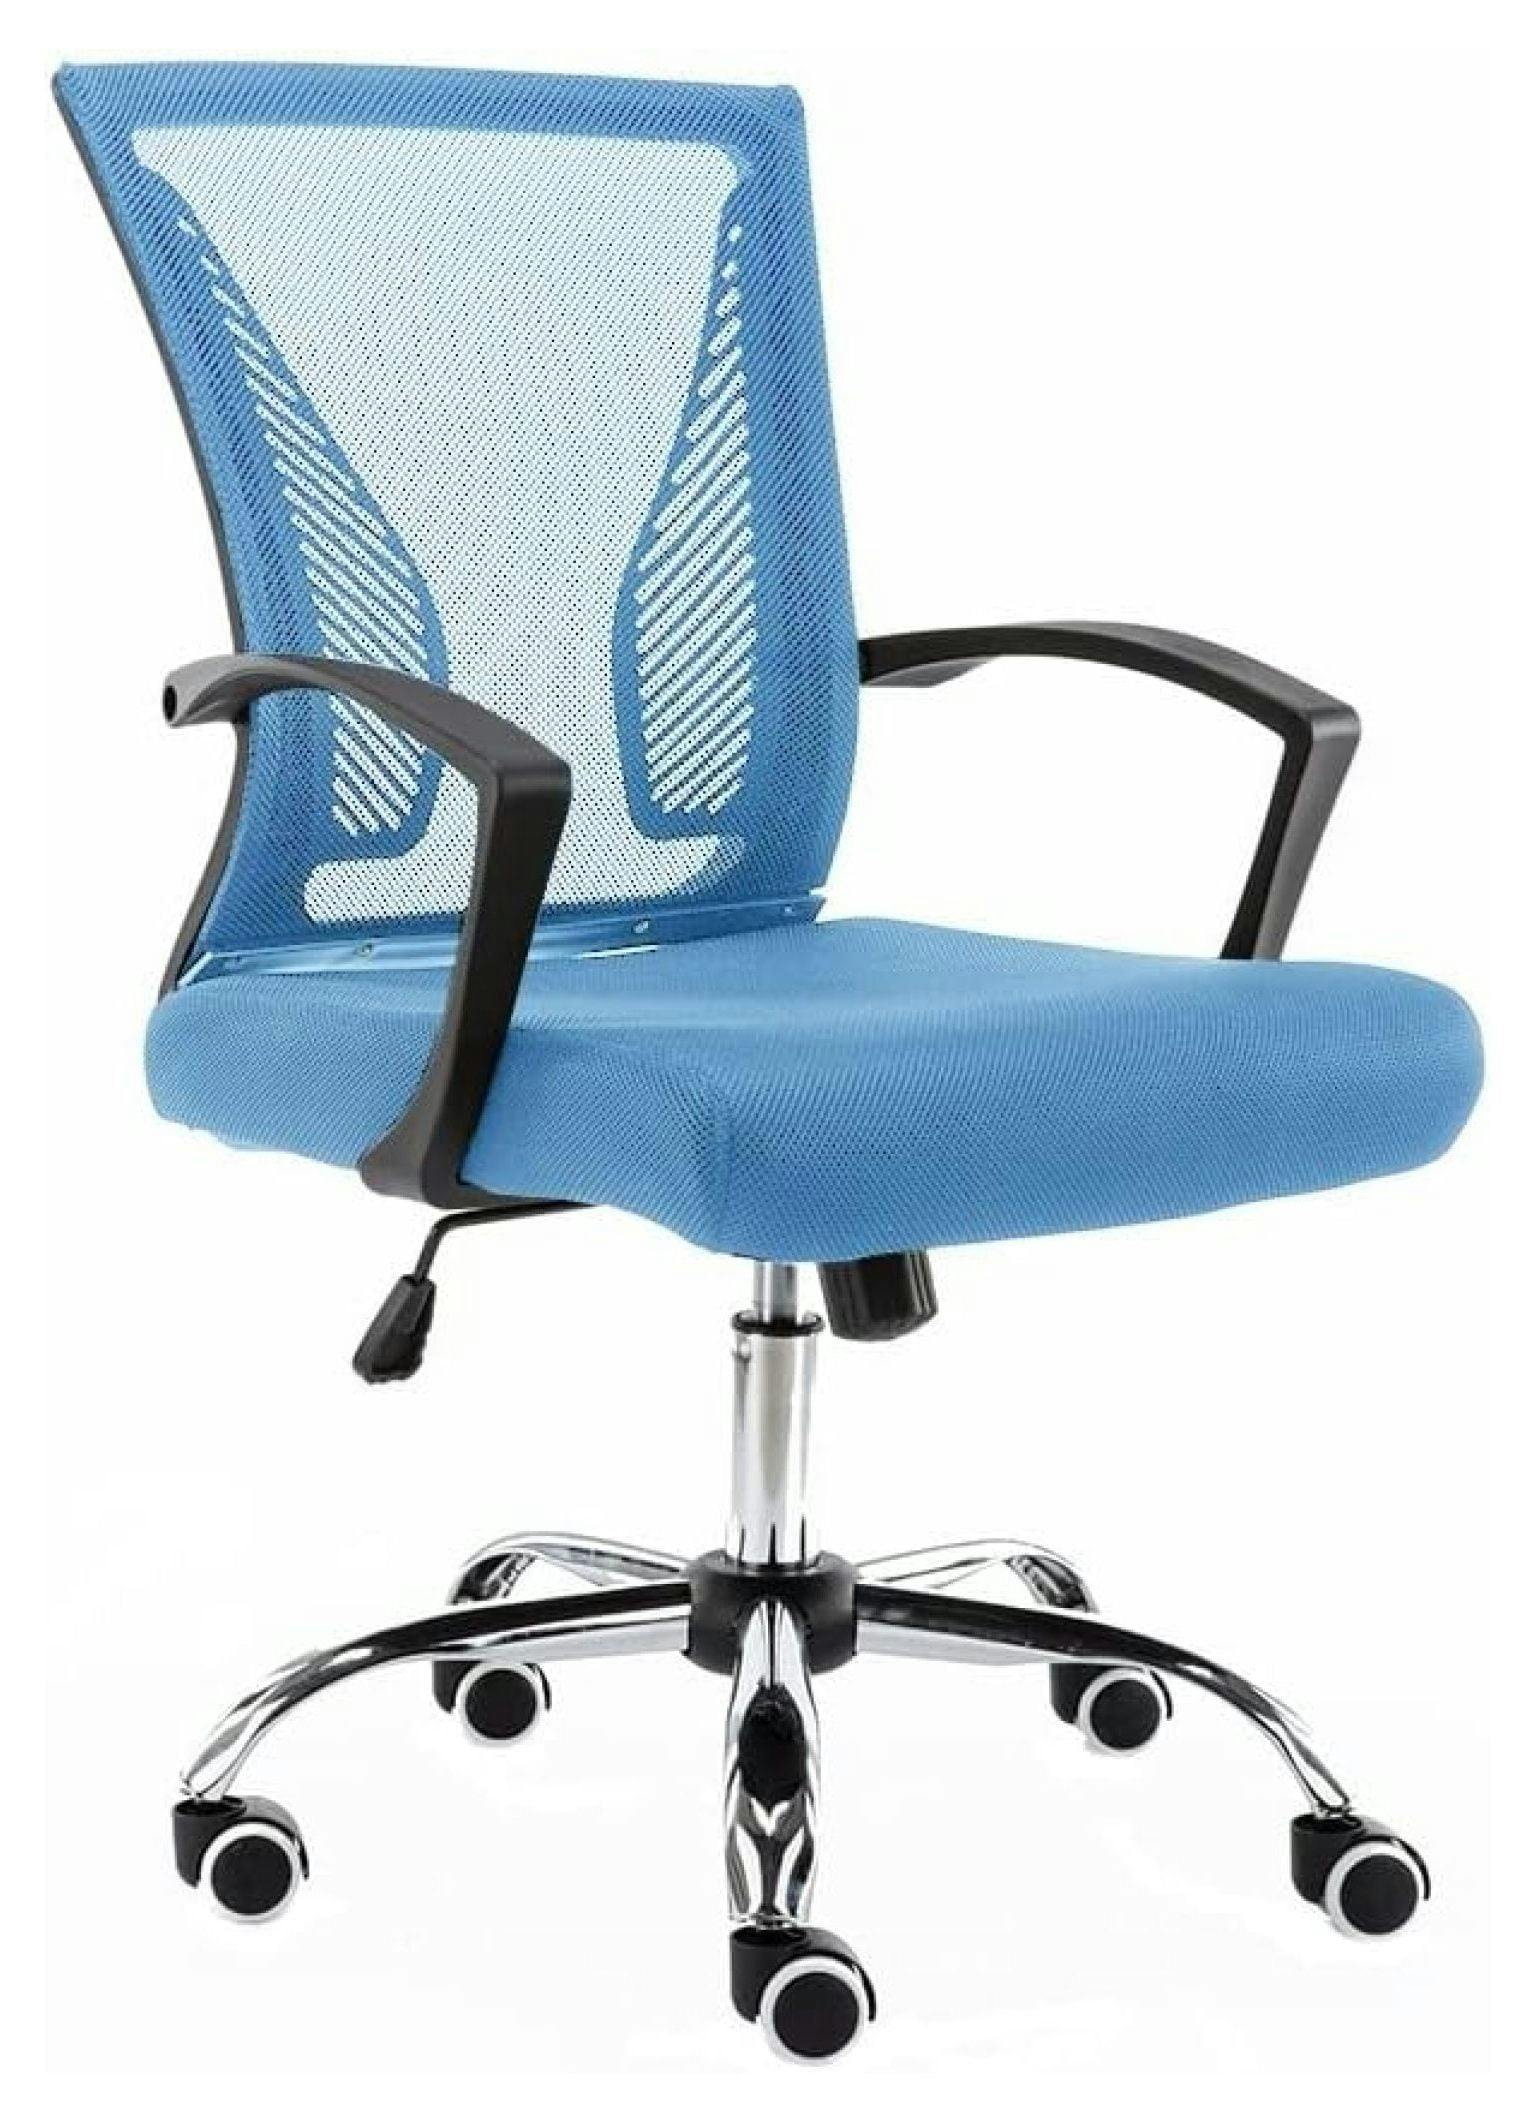 ErgoFlex 21.7" Swivel Mesh Task Chair in Black and Blue